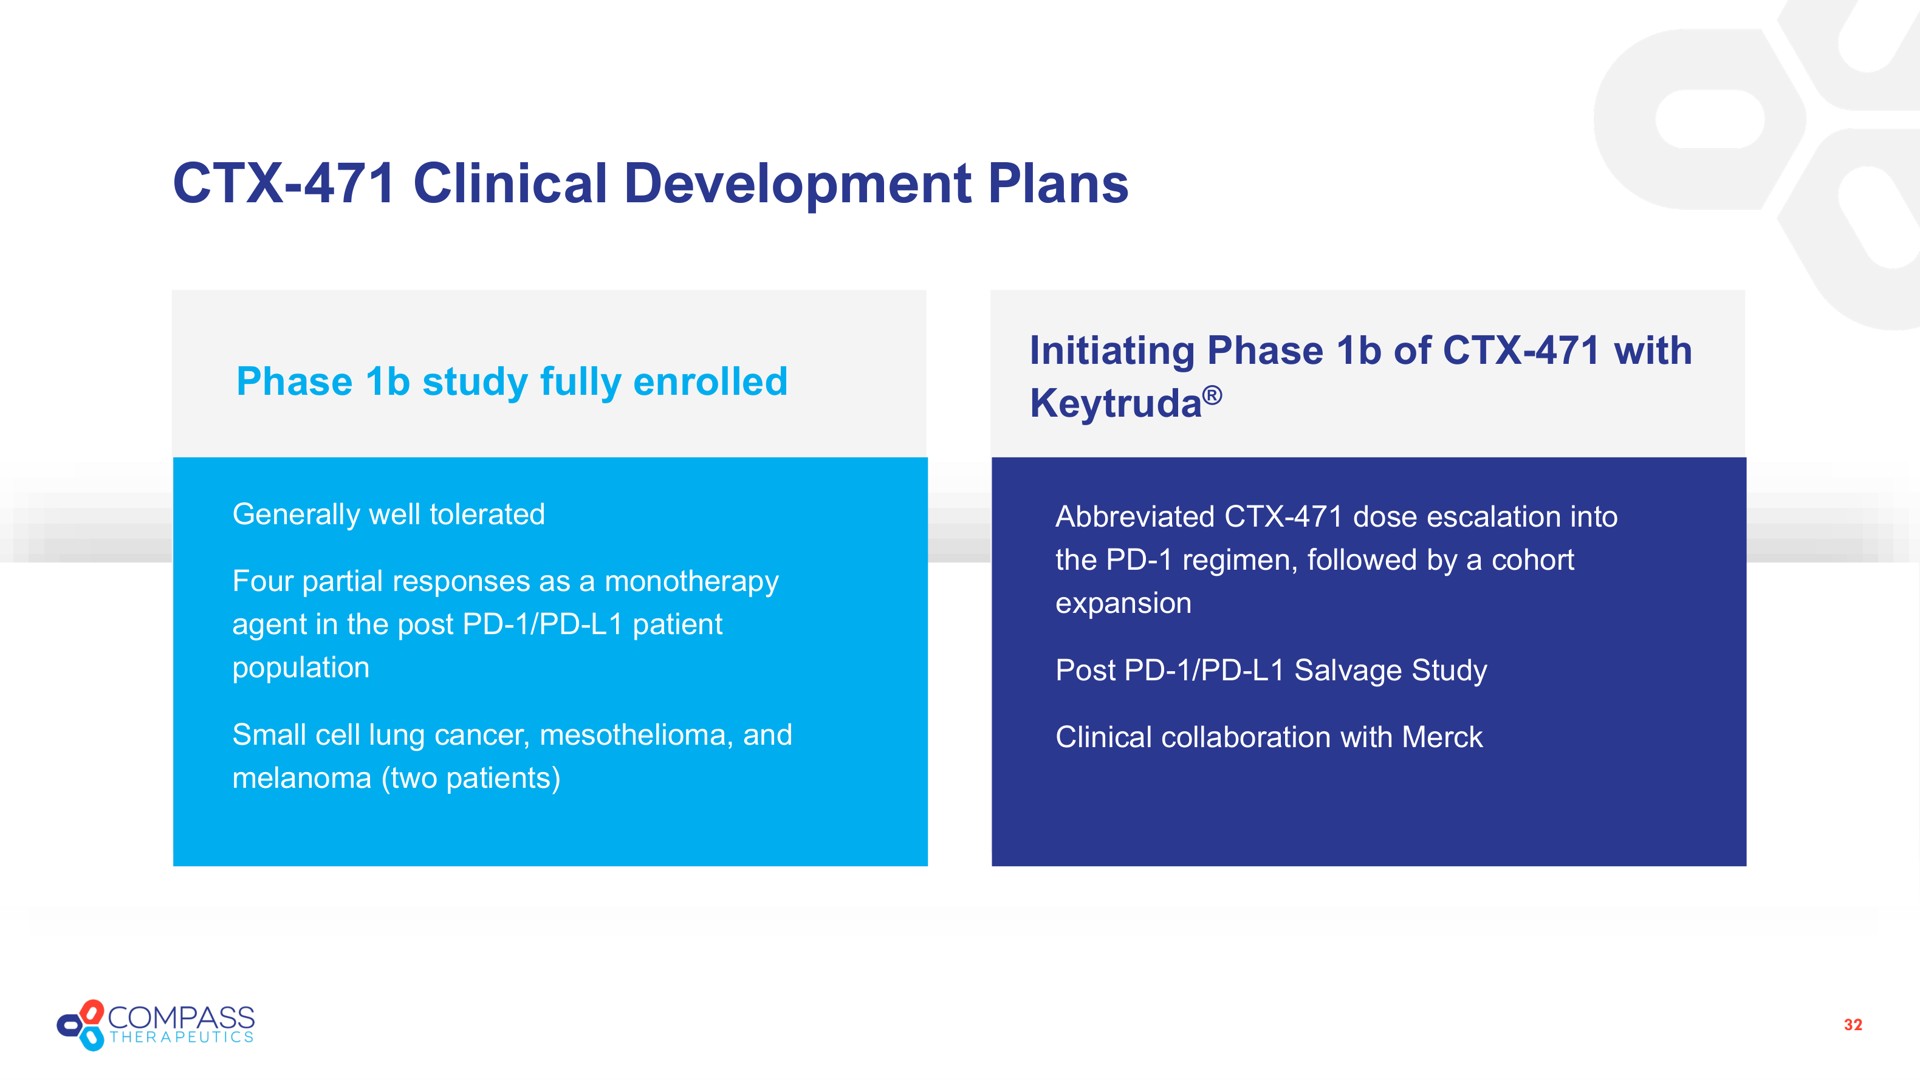 clinical development plans | Compass Therapeutics